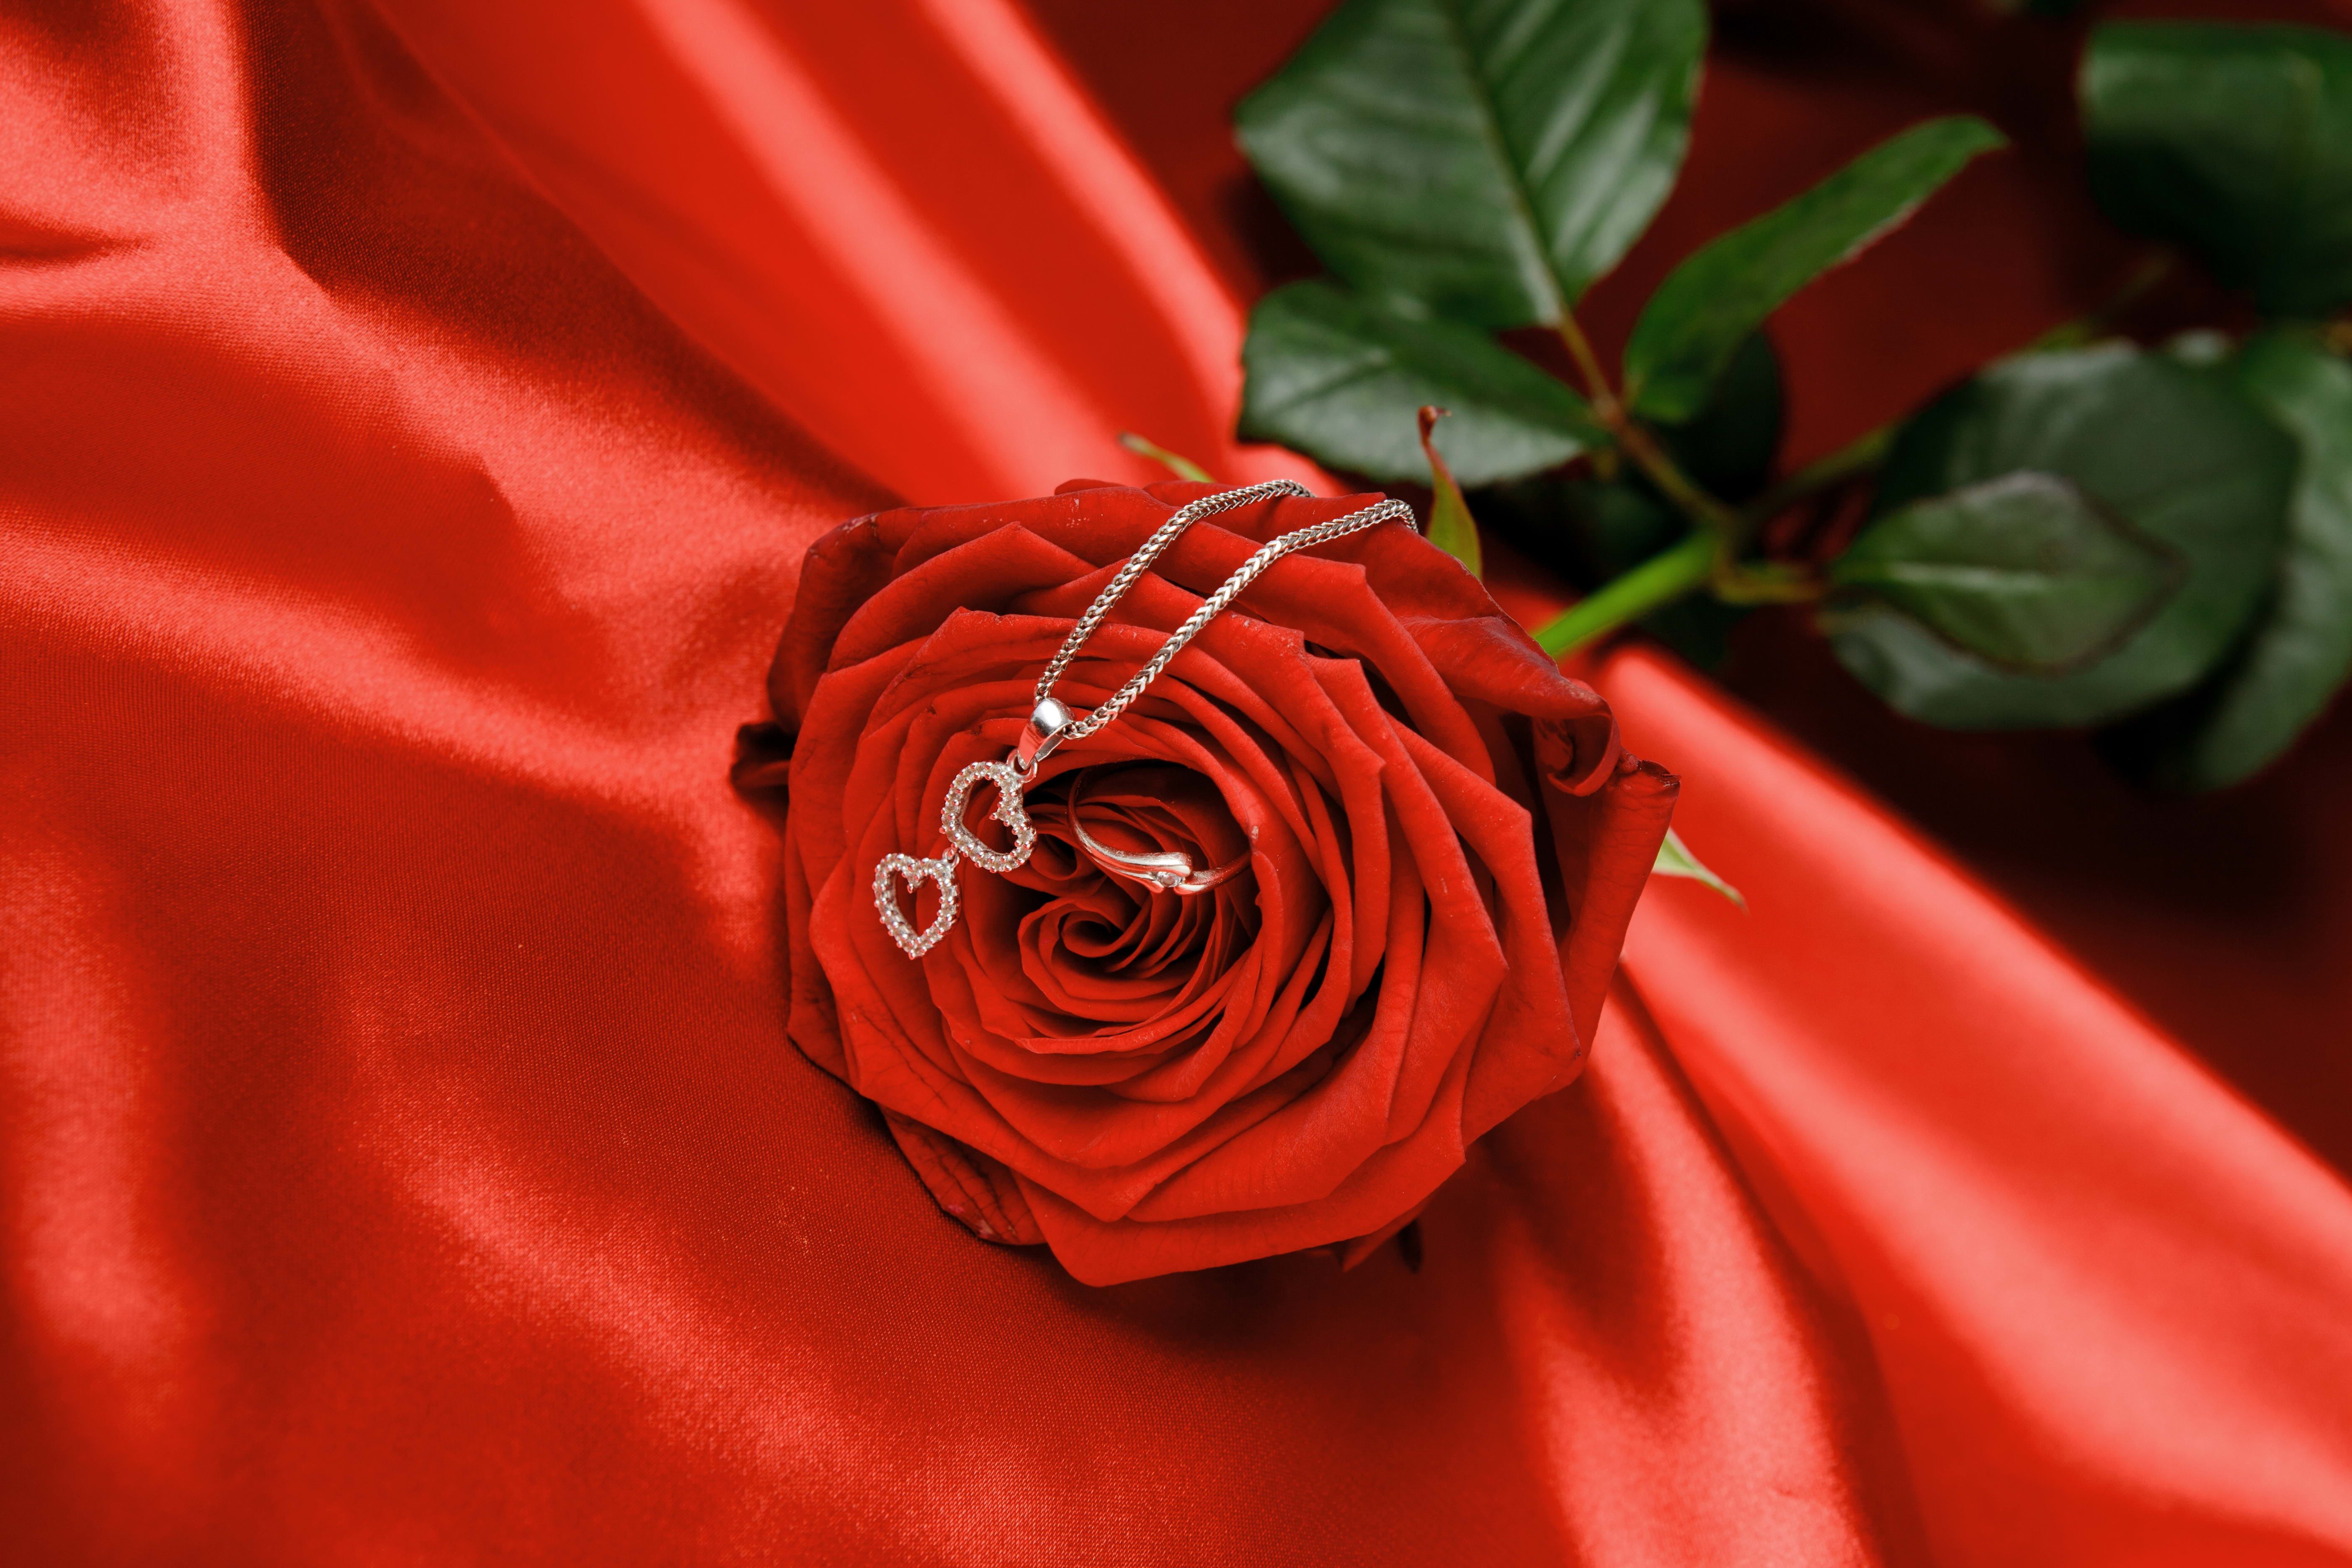 Download wallpaper 5616x3744 rose, chain, heart, flower HD background